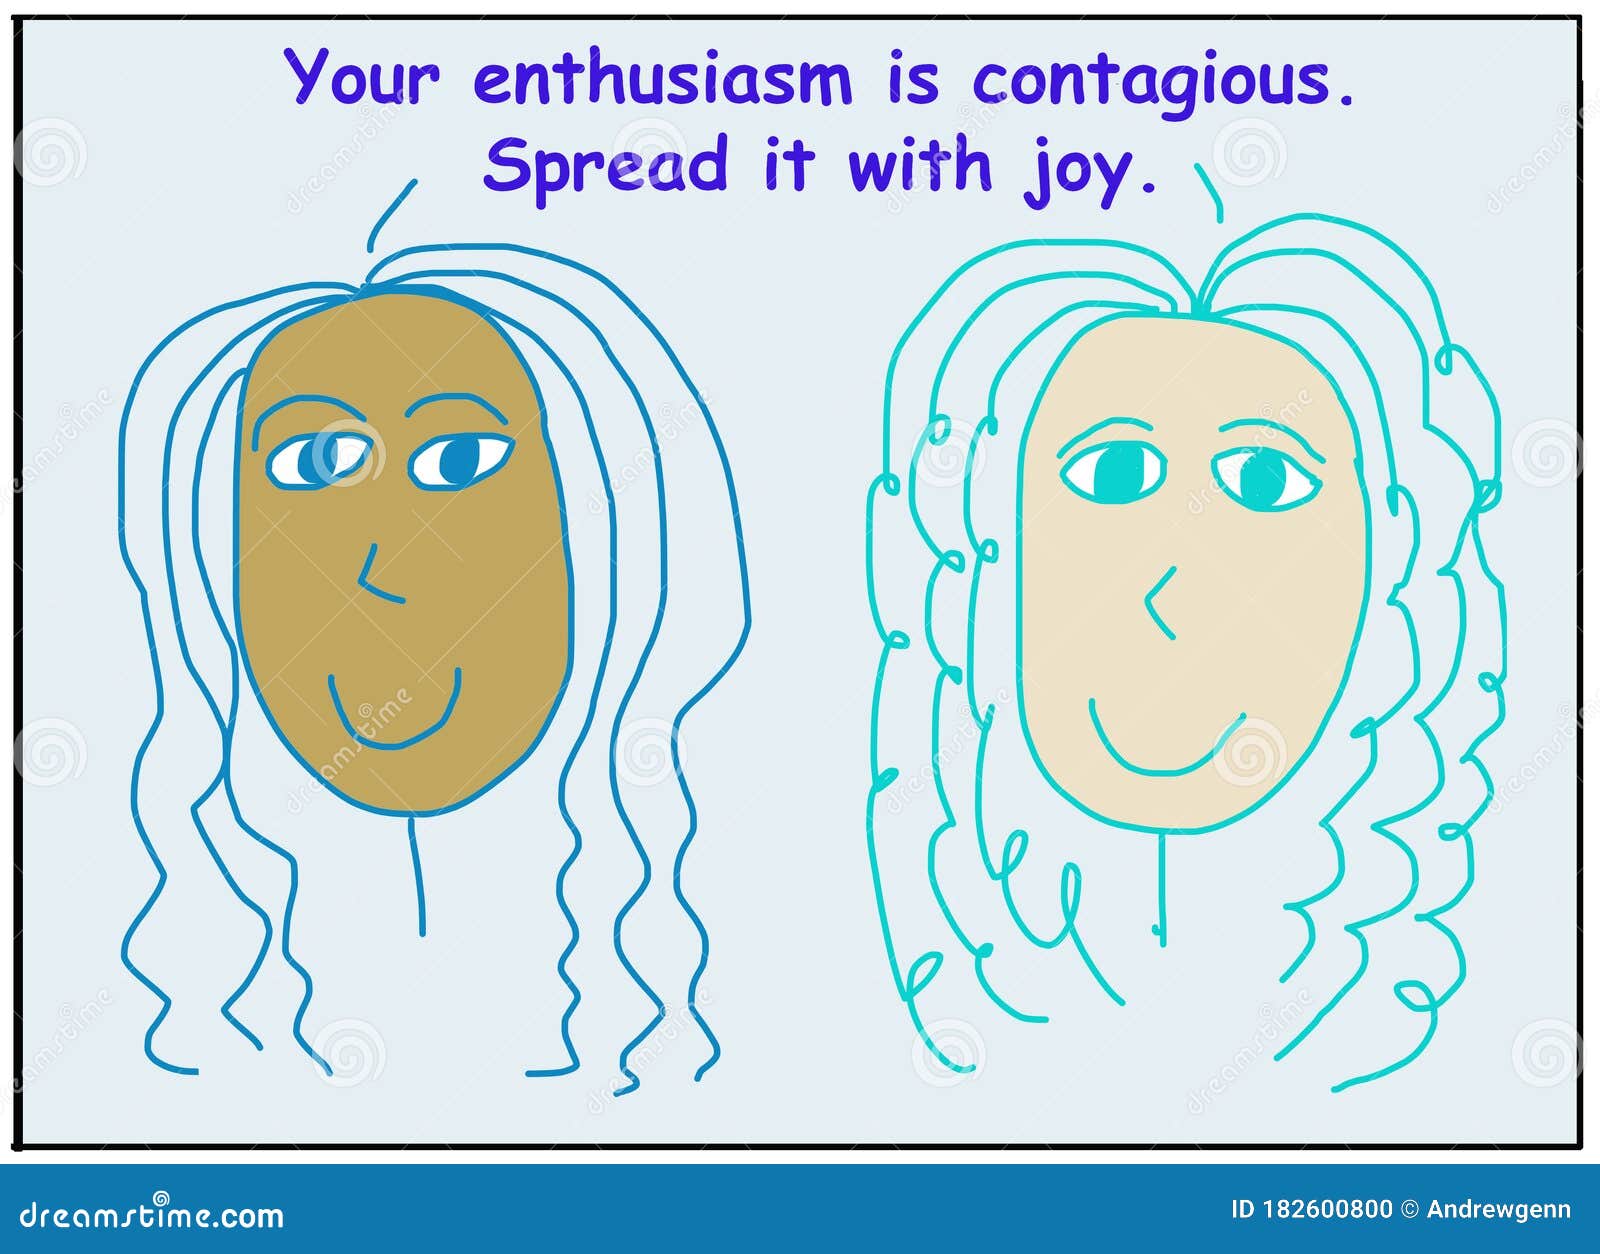 your enthusiasm contagious spread joy